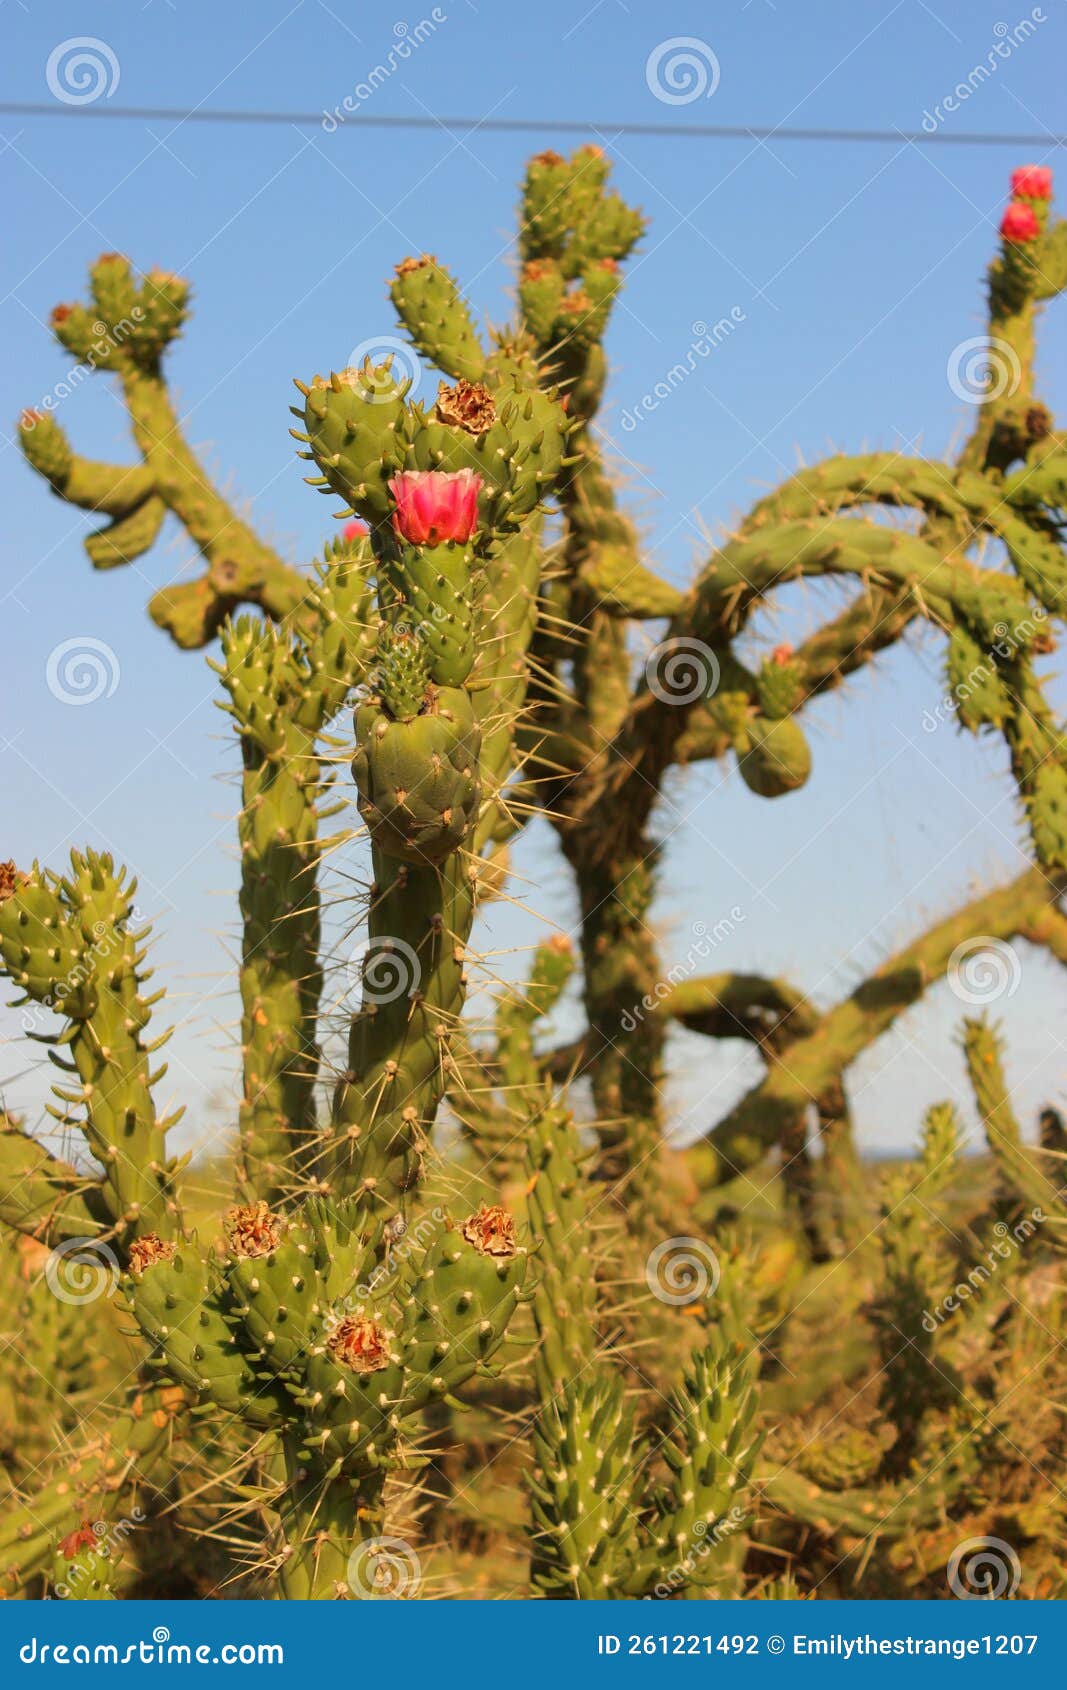 kaktus flower on tree spanien  alicante